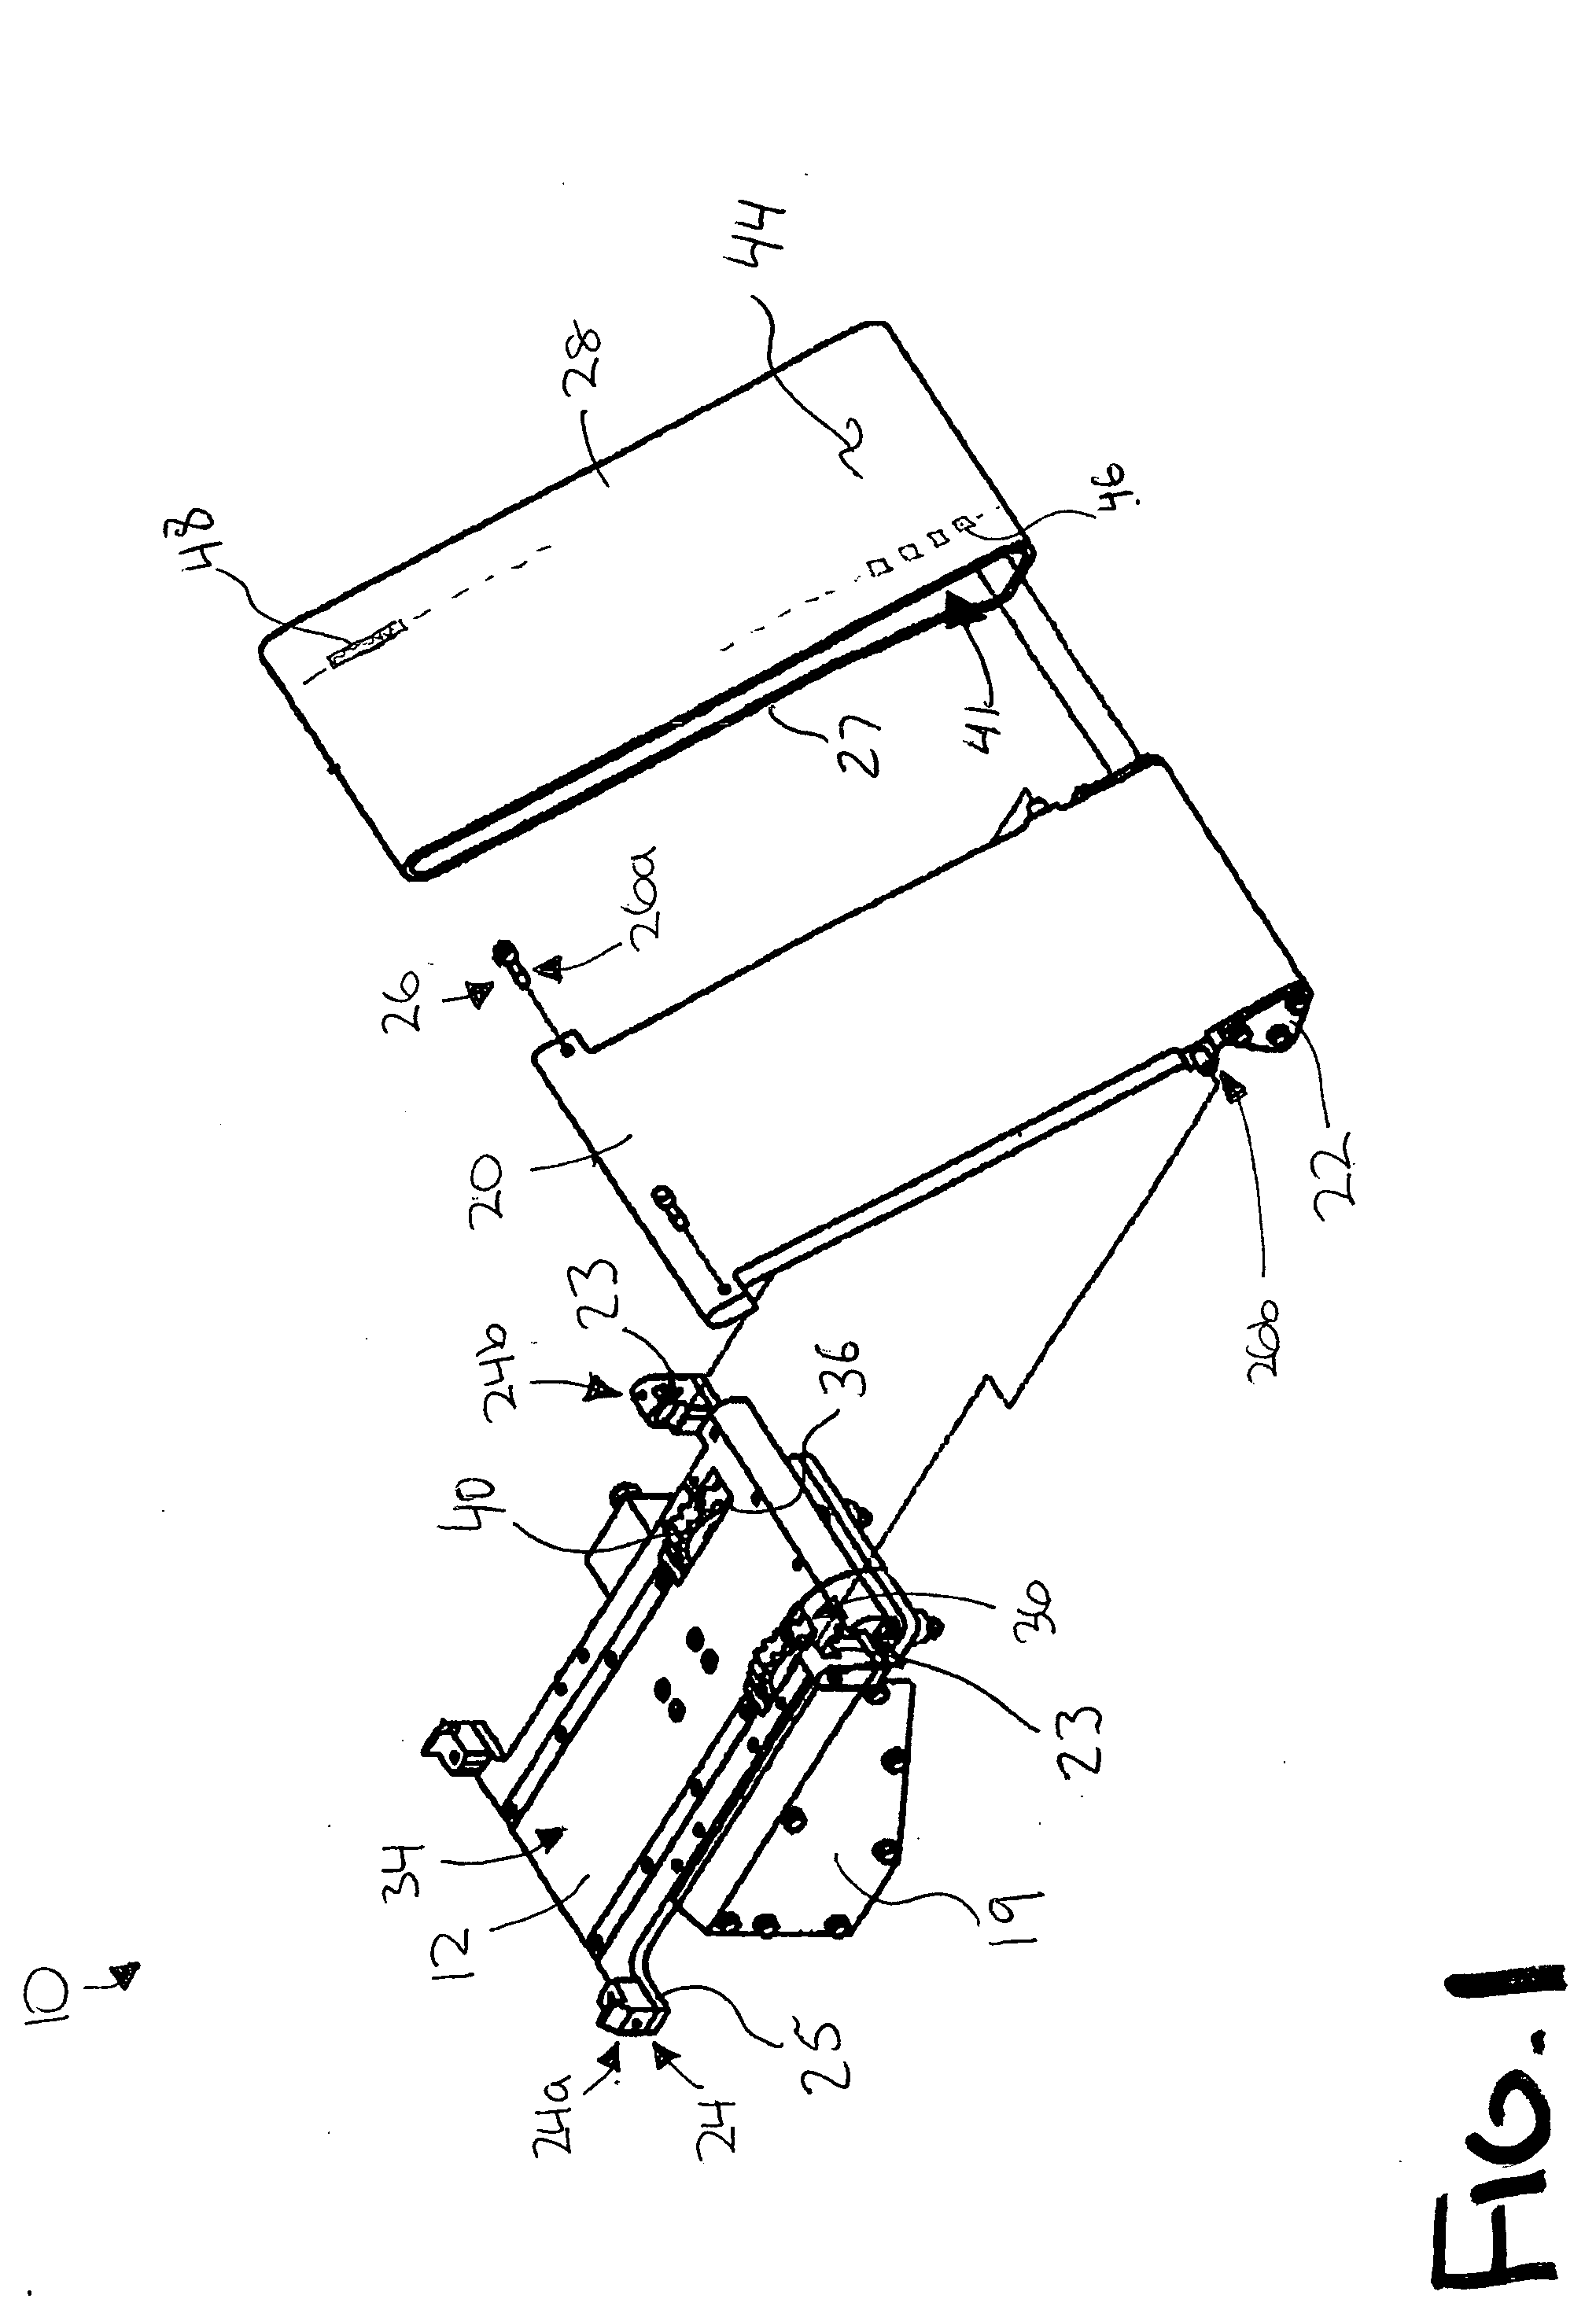 Belt conveyor with external drive